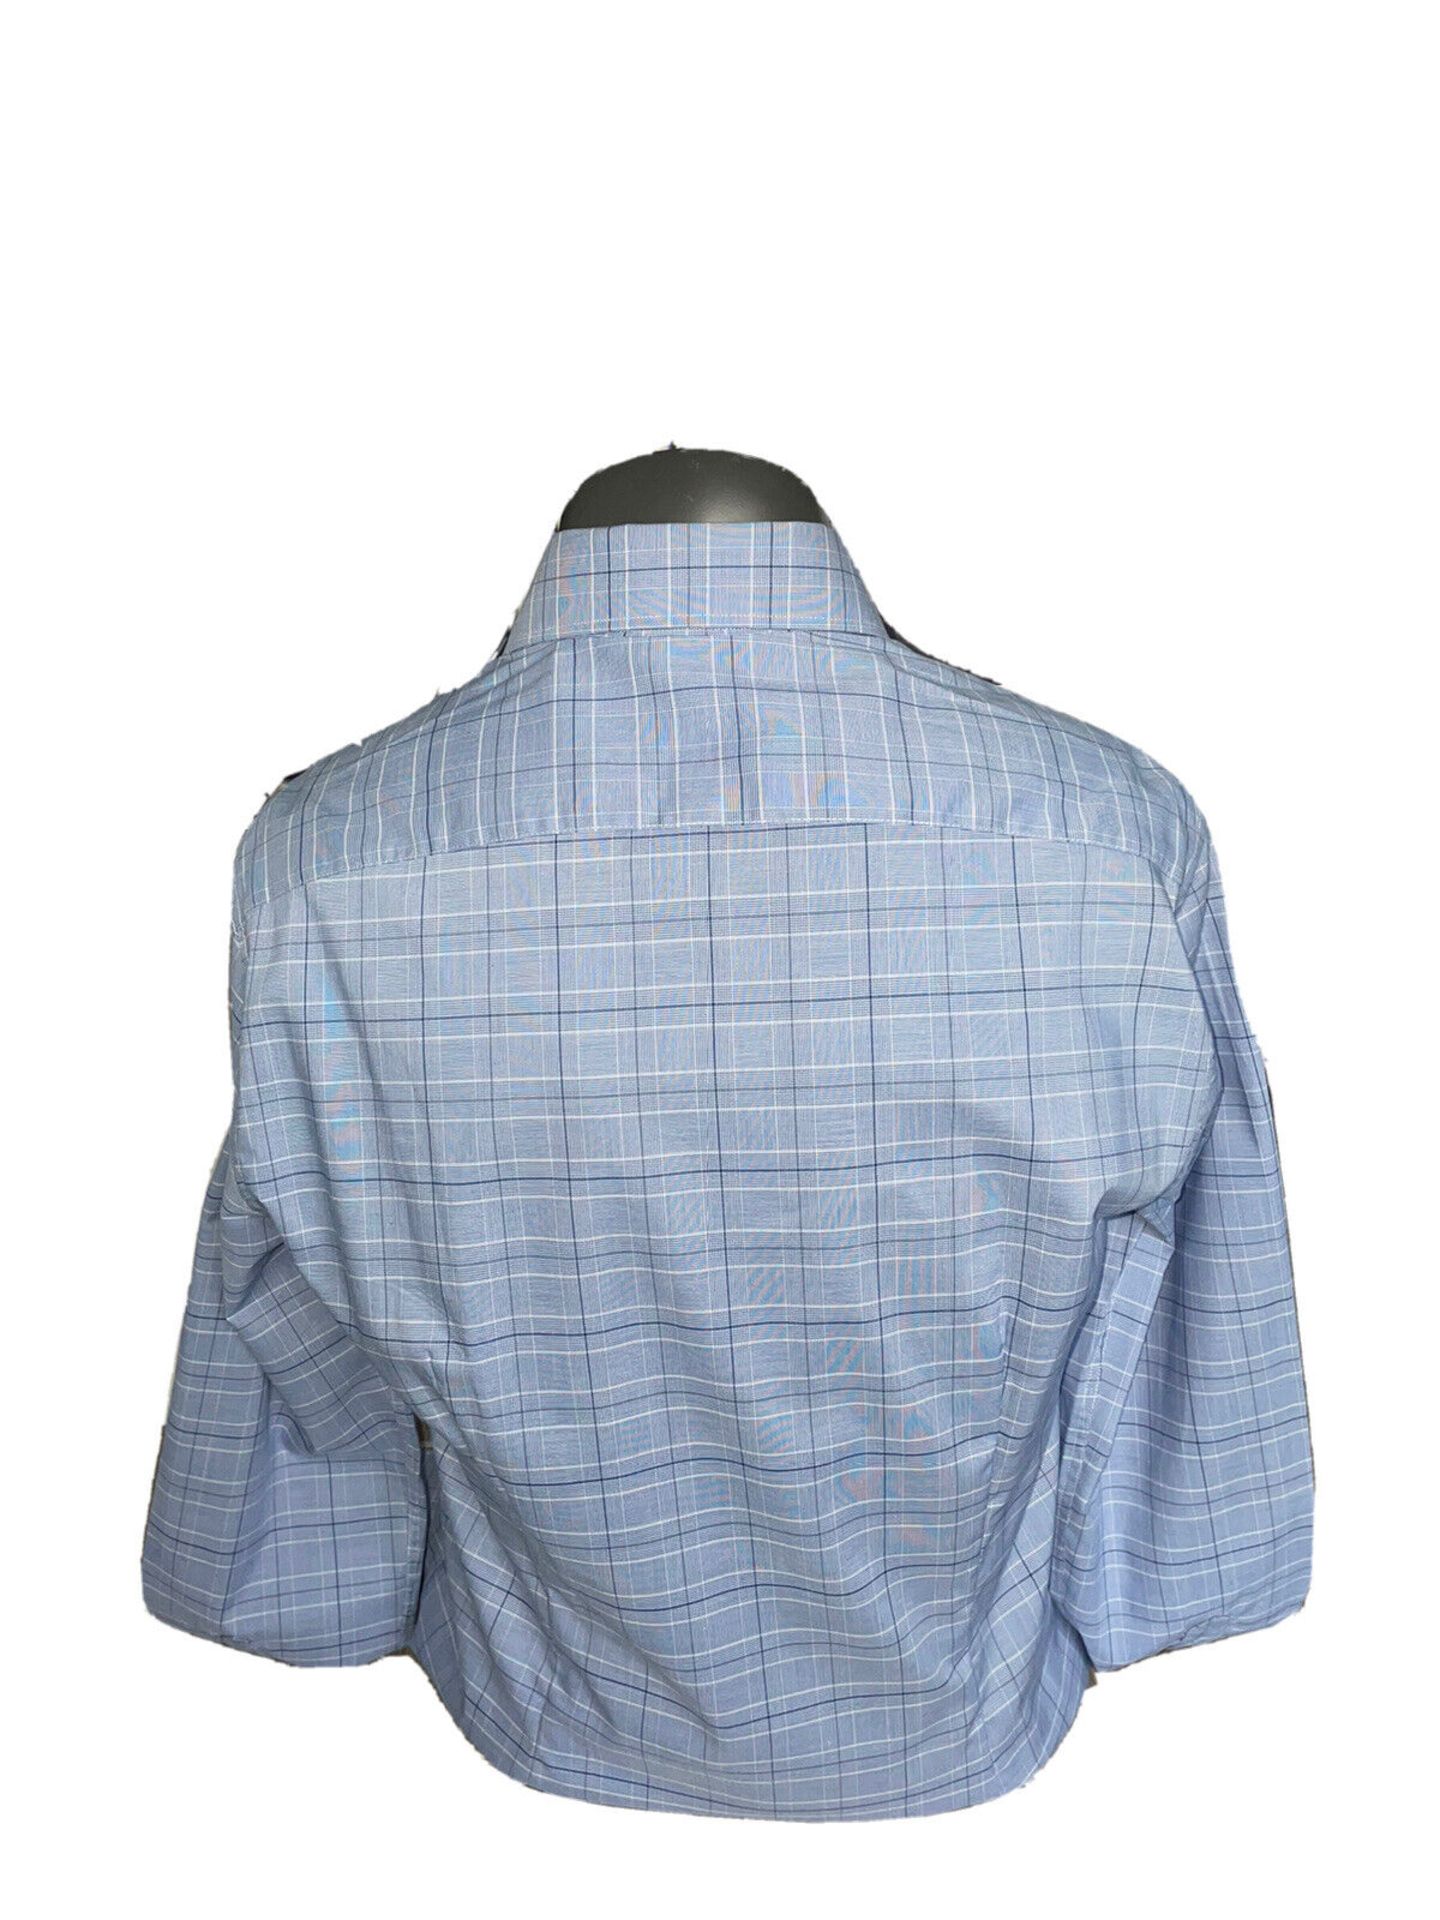 tommy hilfiger blue shirt size 39 RRP £82 - Image 2 of 2